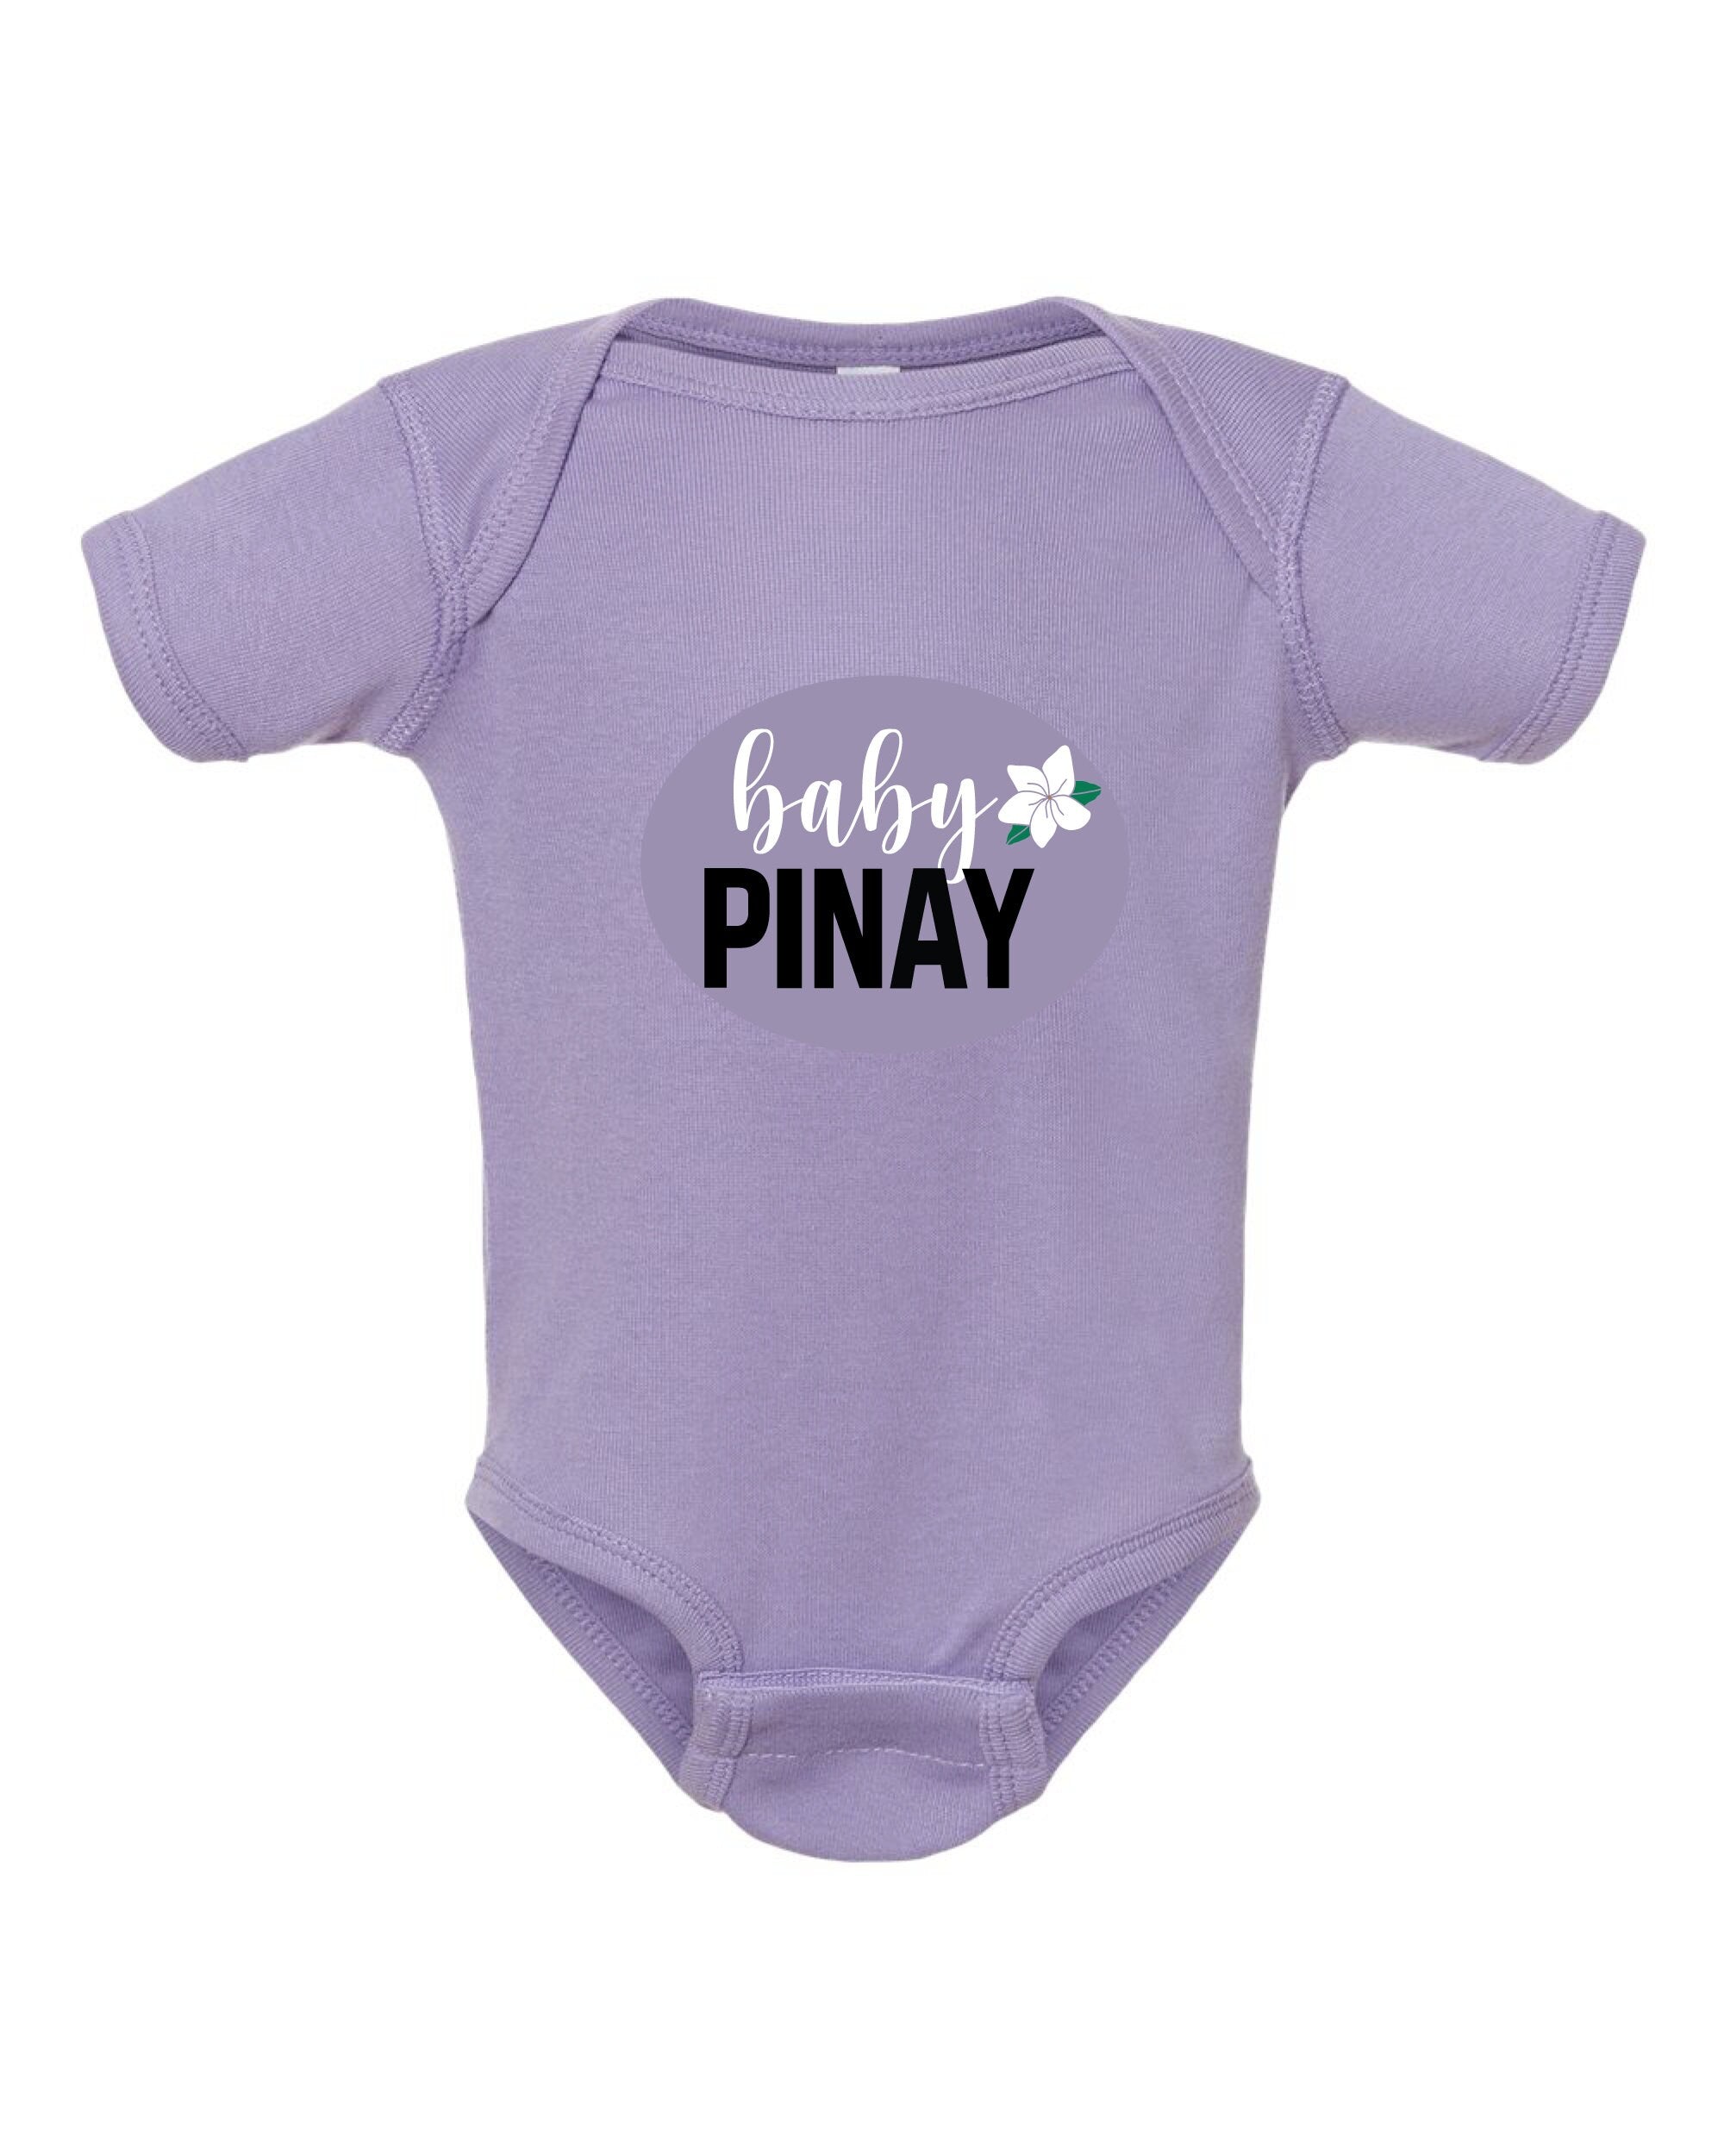 Baby Pinay Onesie, Infant, Filipino Apparels